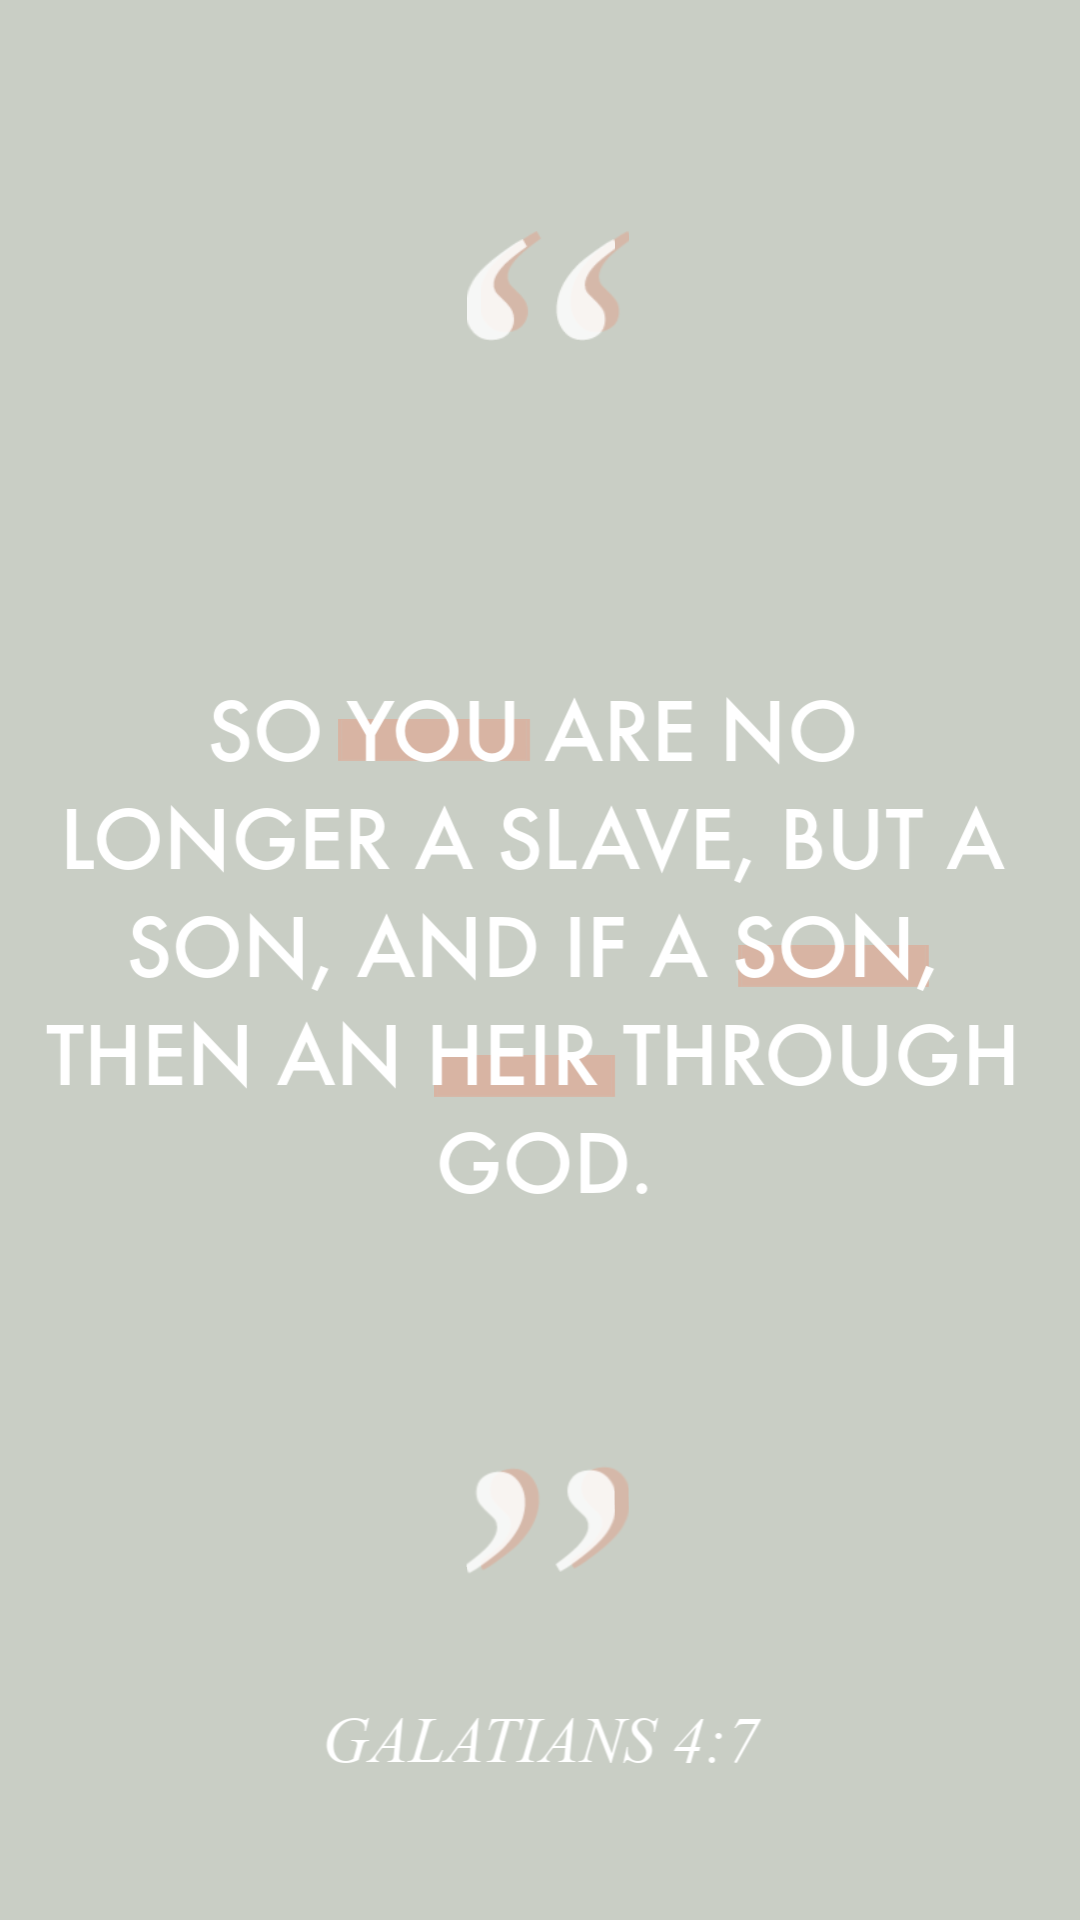 So you are no longer a slave, but a son, and if a son, then an heir through God. Galatians 4:7. #12DaysofGrace #faith #advent